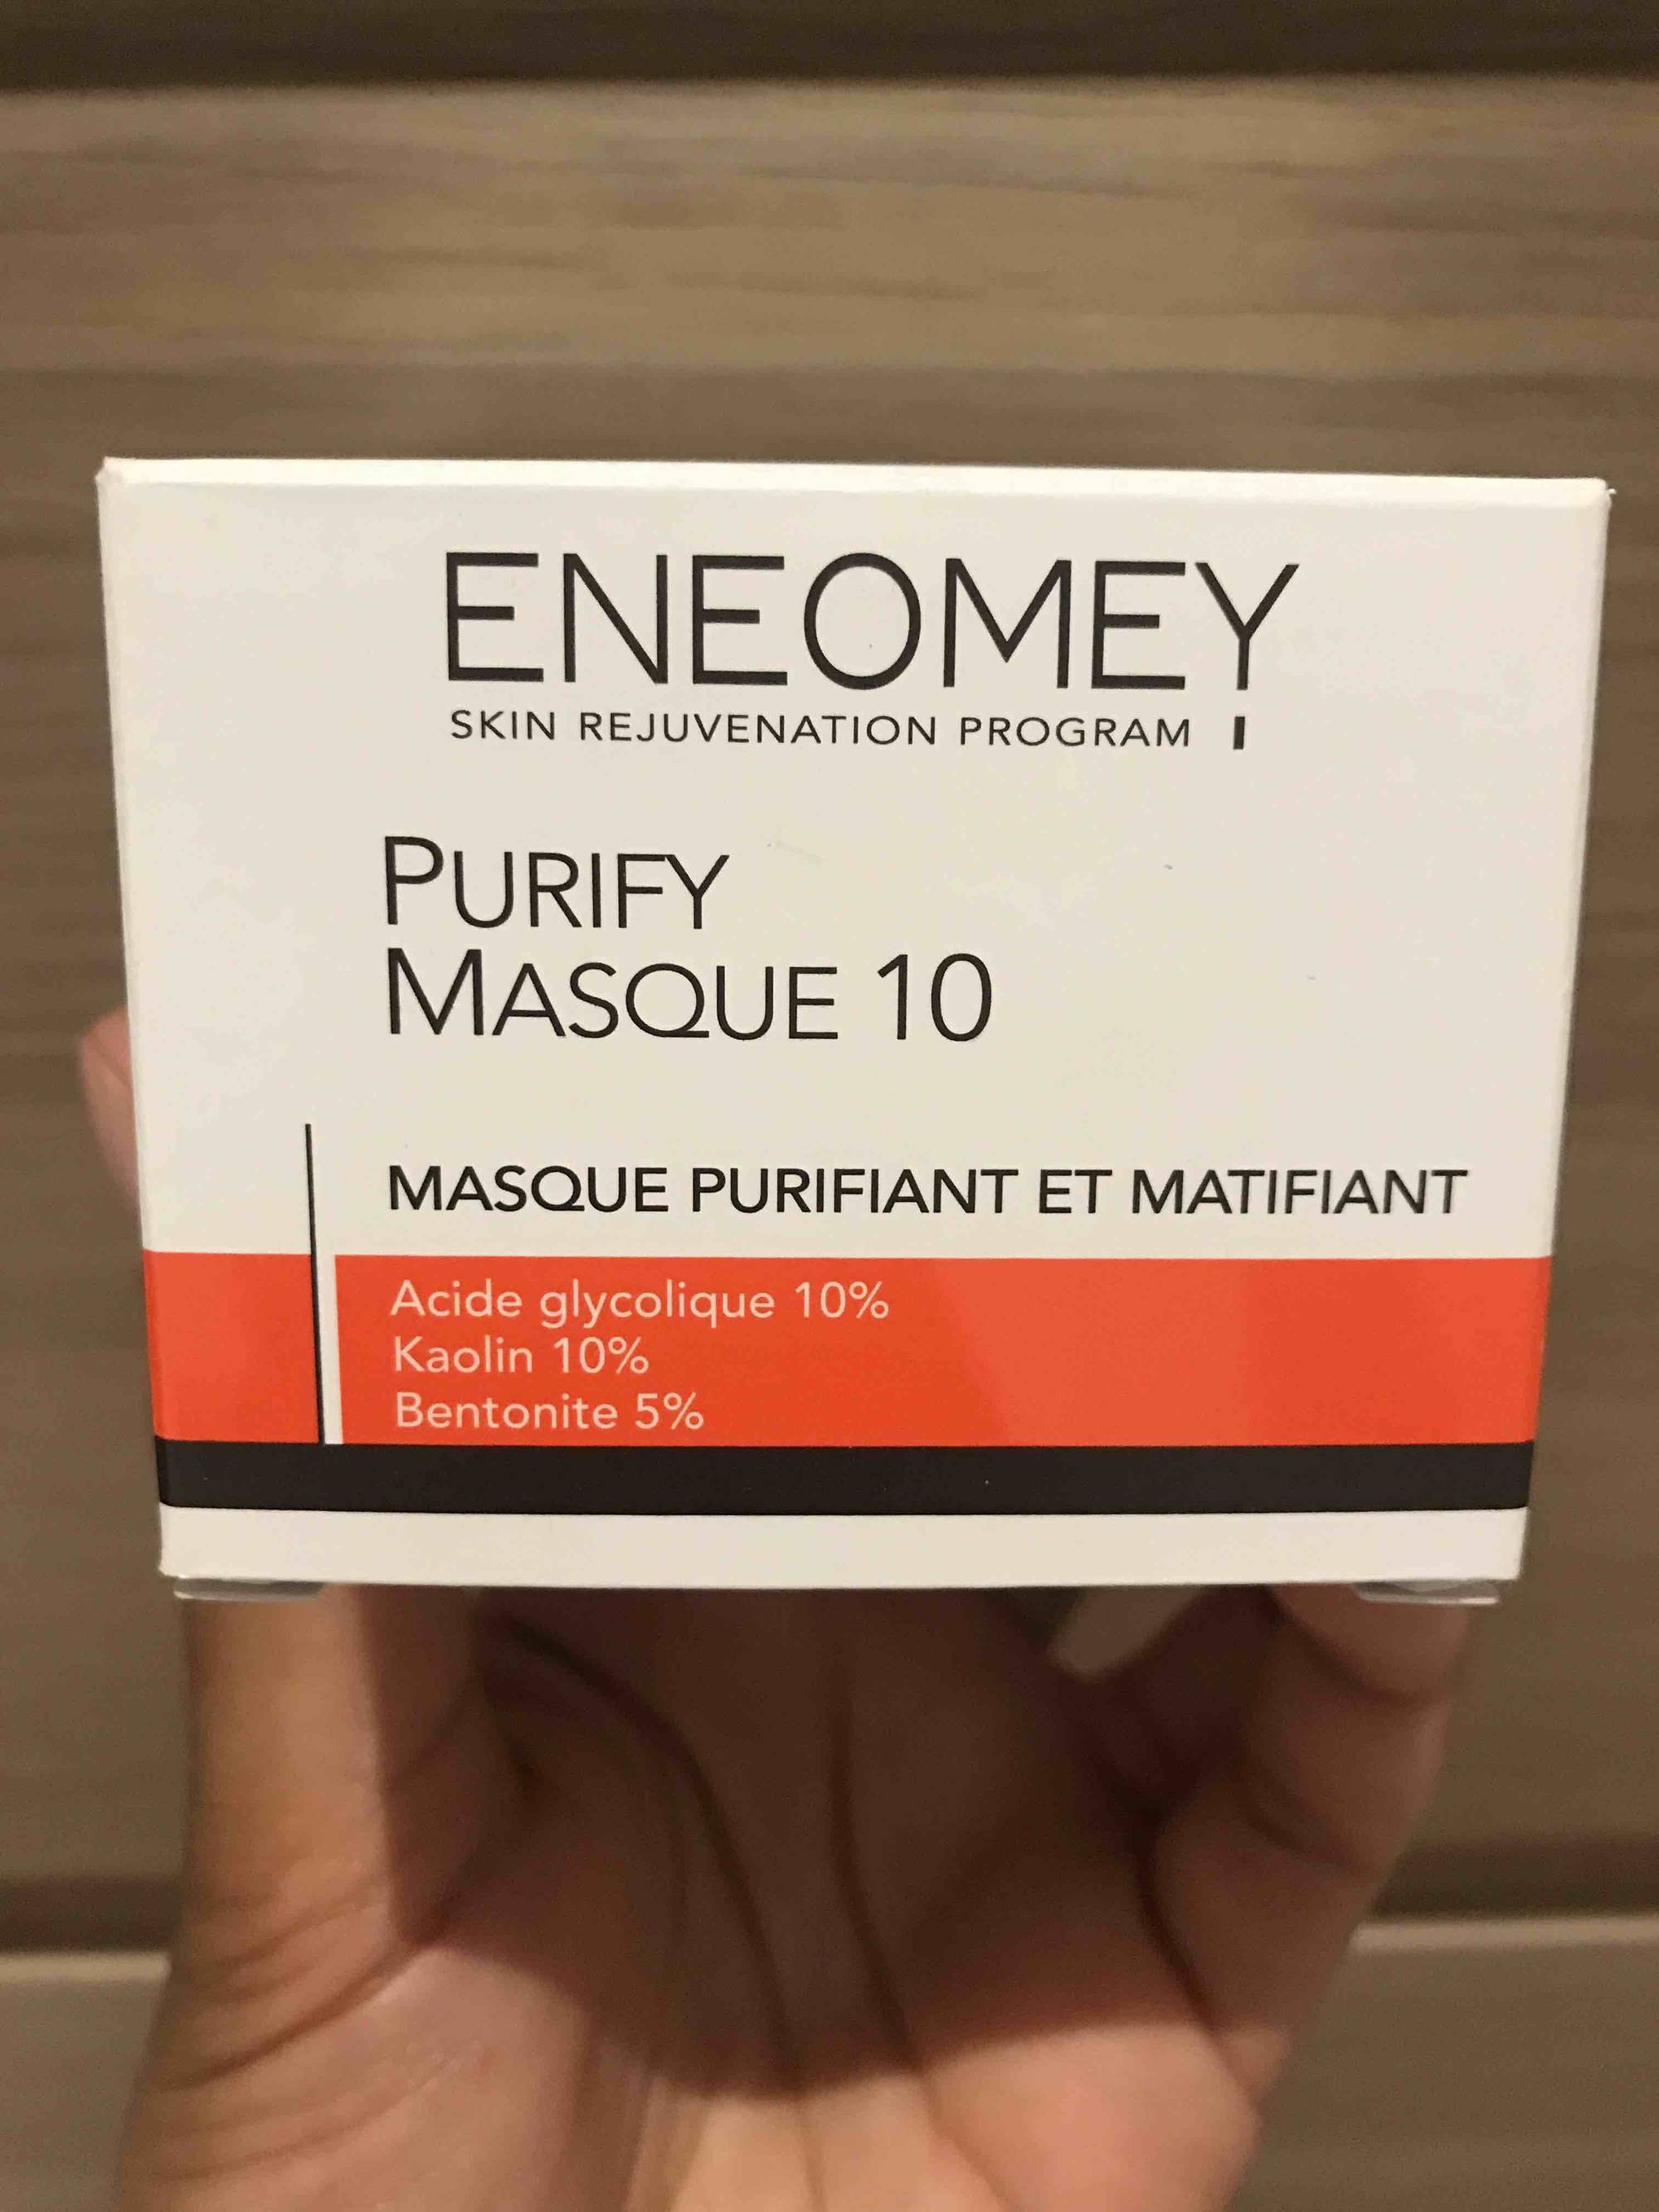 ENEOMEY - Purify masque 10 - Masque purifiant et matifiant 